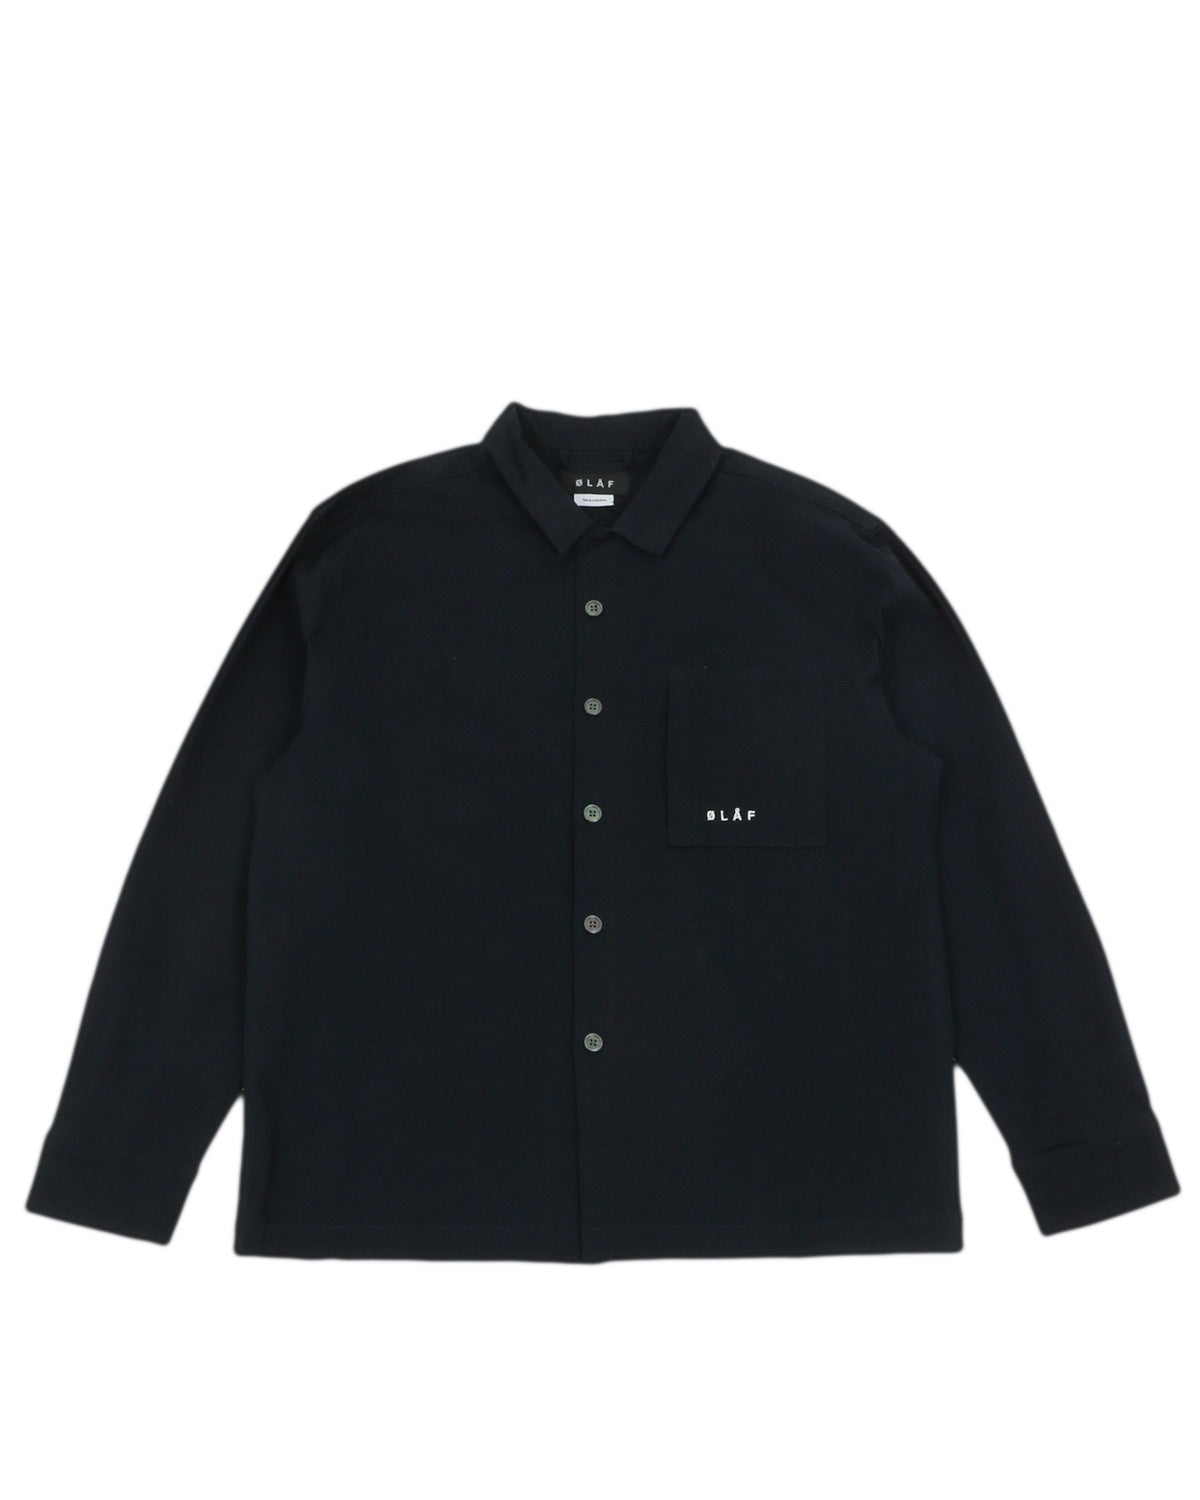 olaf_olaf zip pocket shirt_navy_1_3